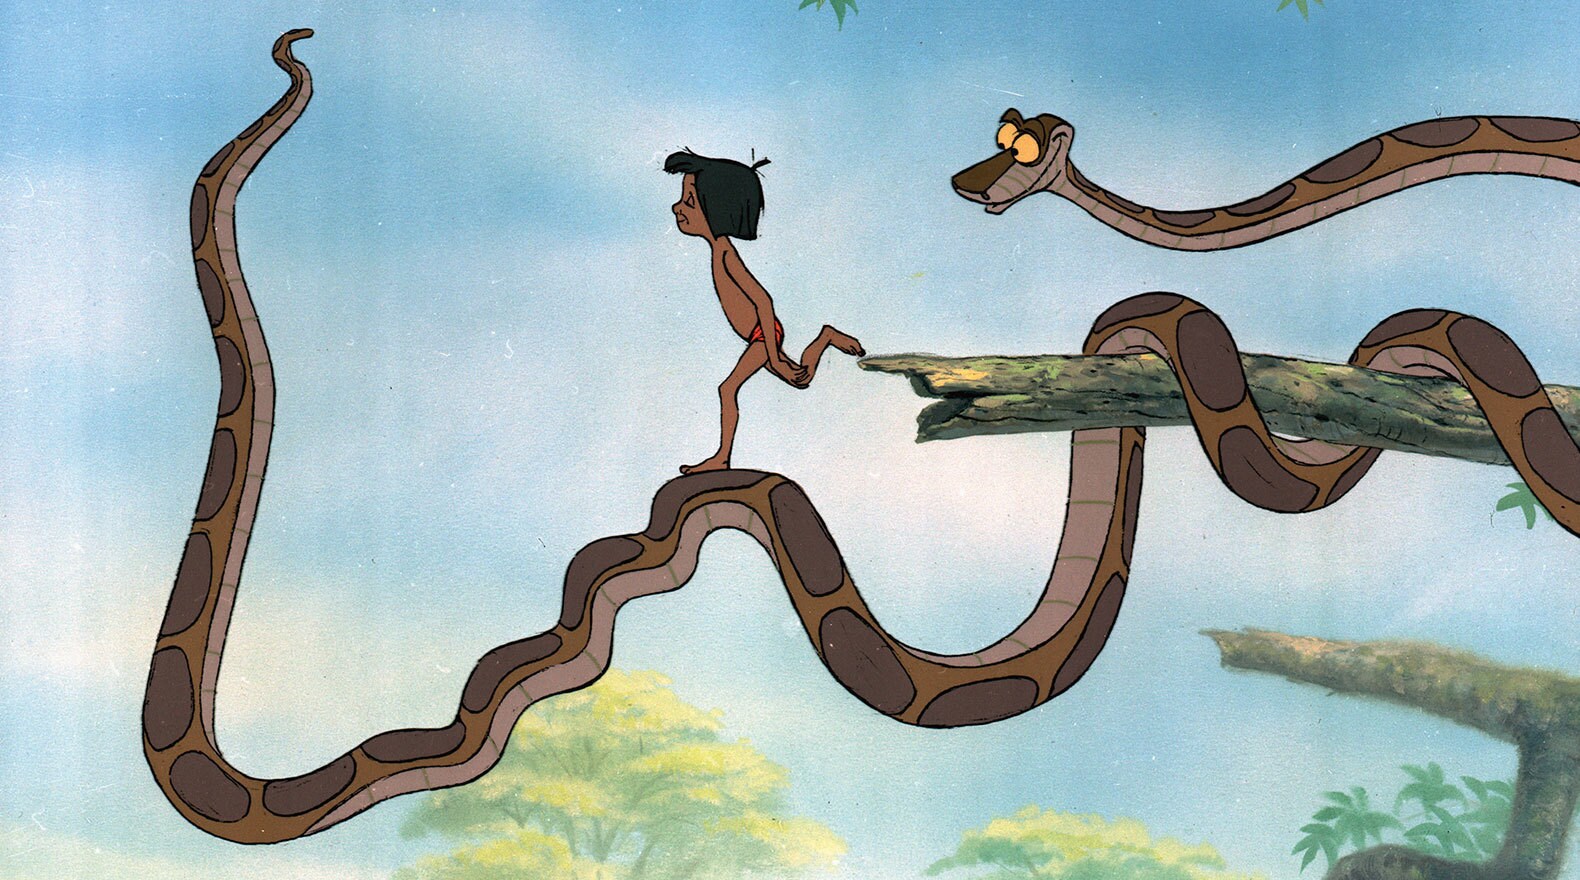 Mowgli is under Kaa's hypnotic spell.